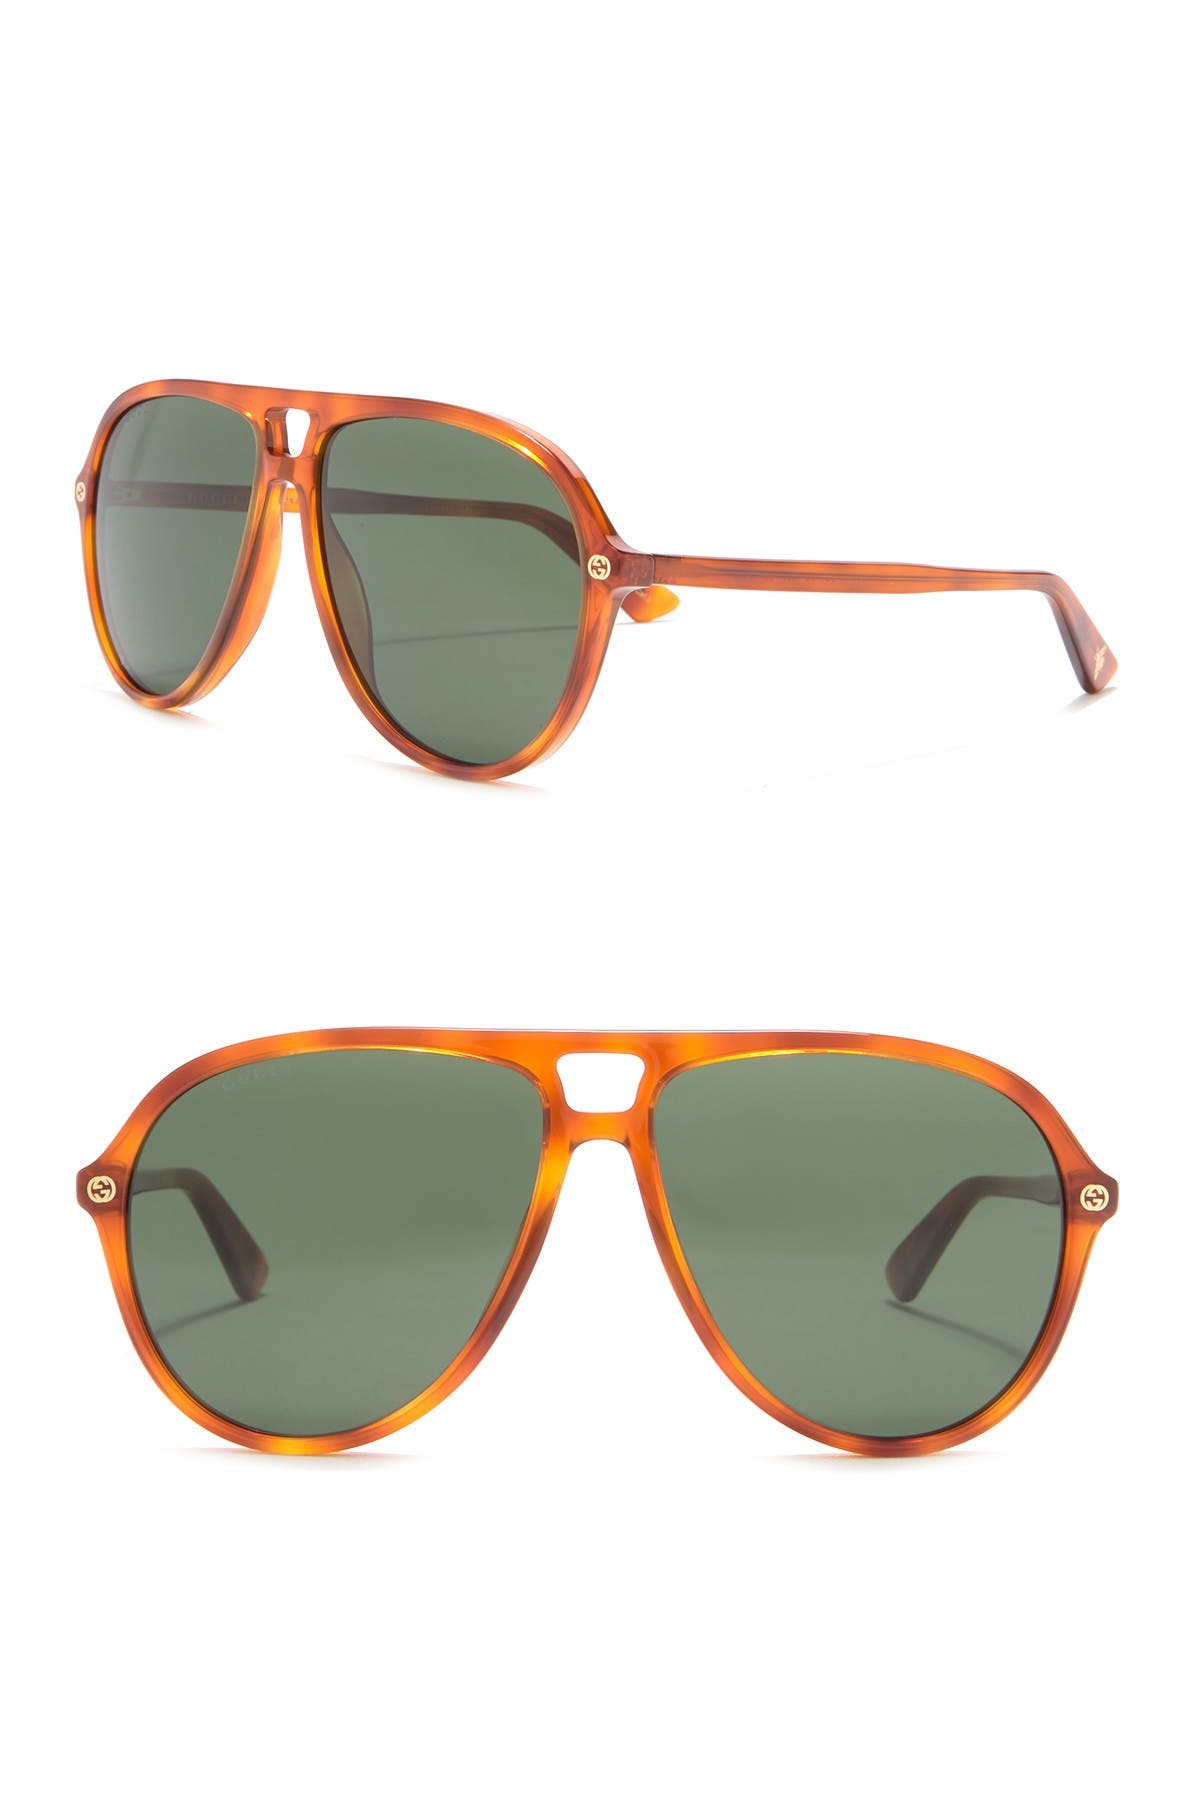 gucci 59mm aviator sunglasses